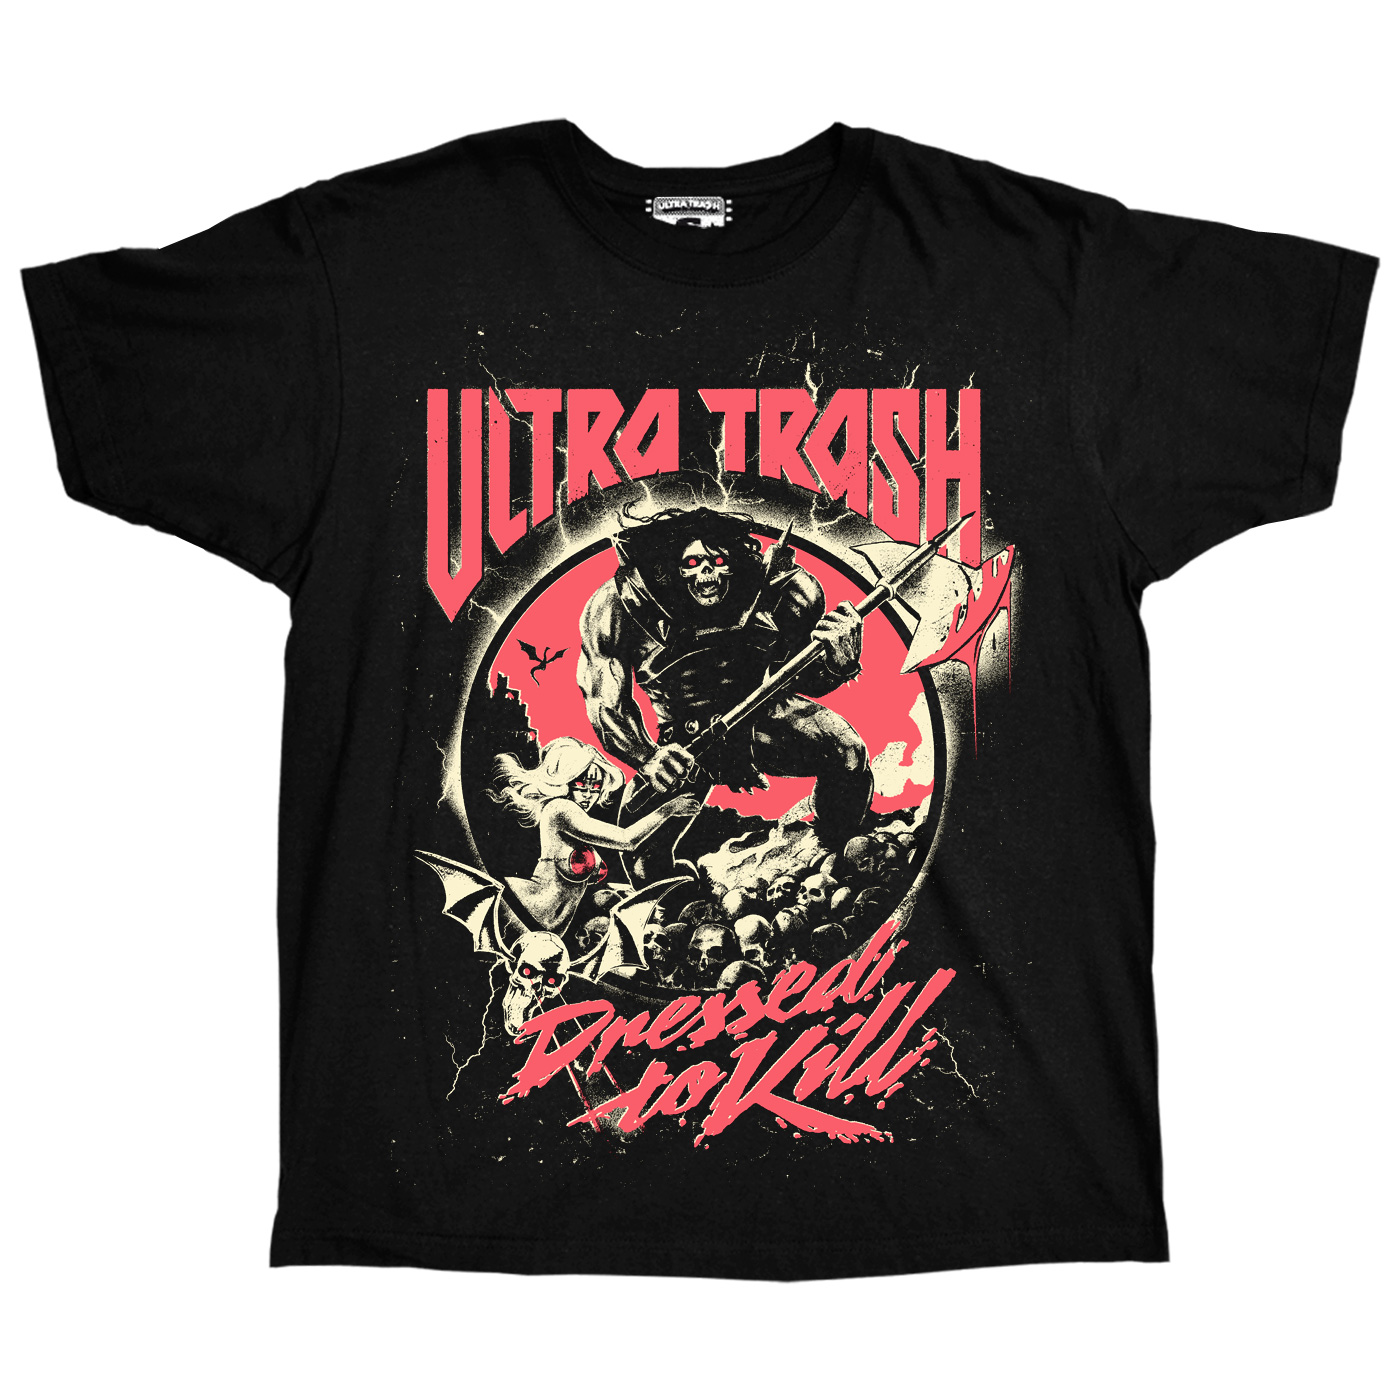 ultra-trash-dressed-to-kill-t-shirt-black-men